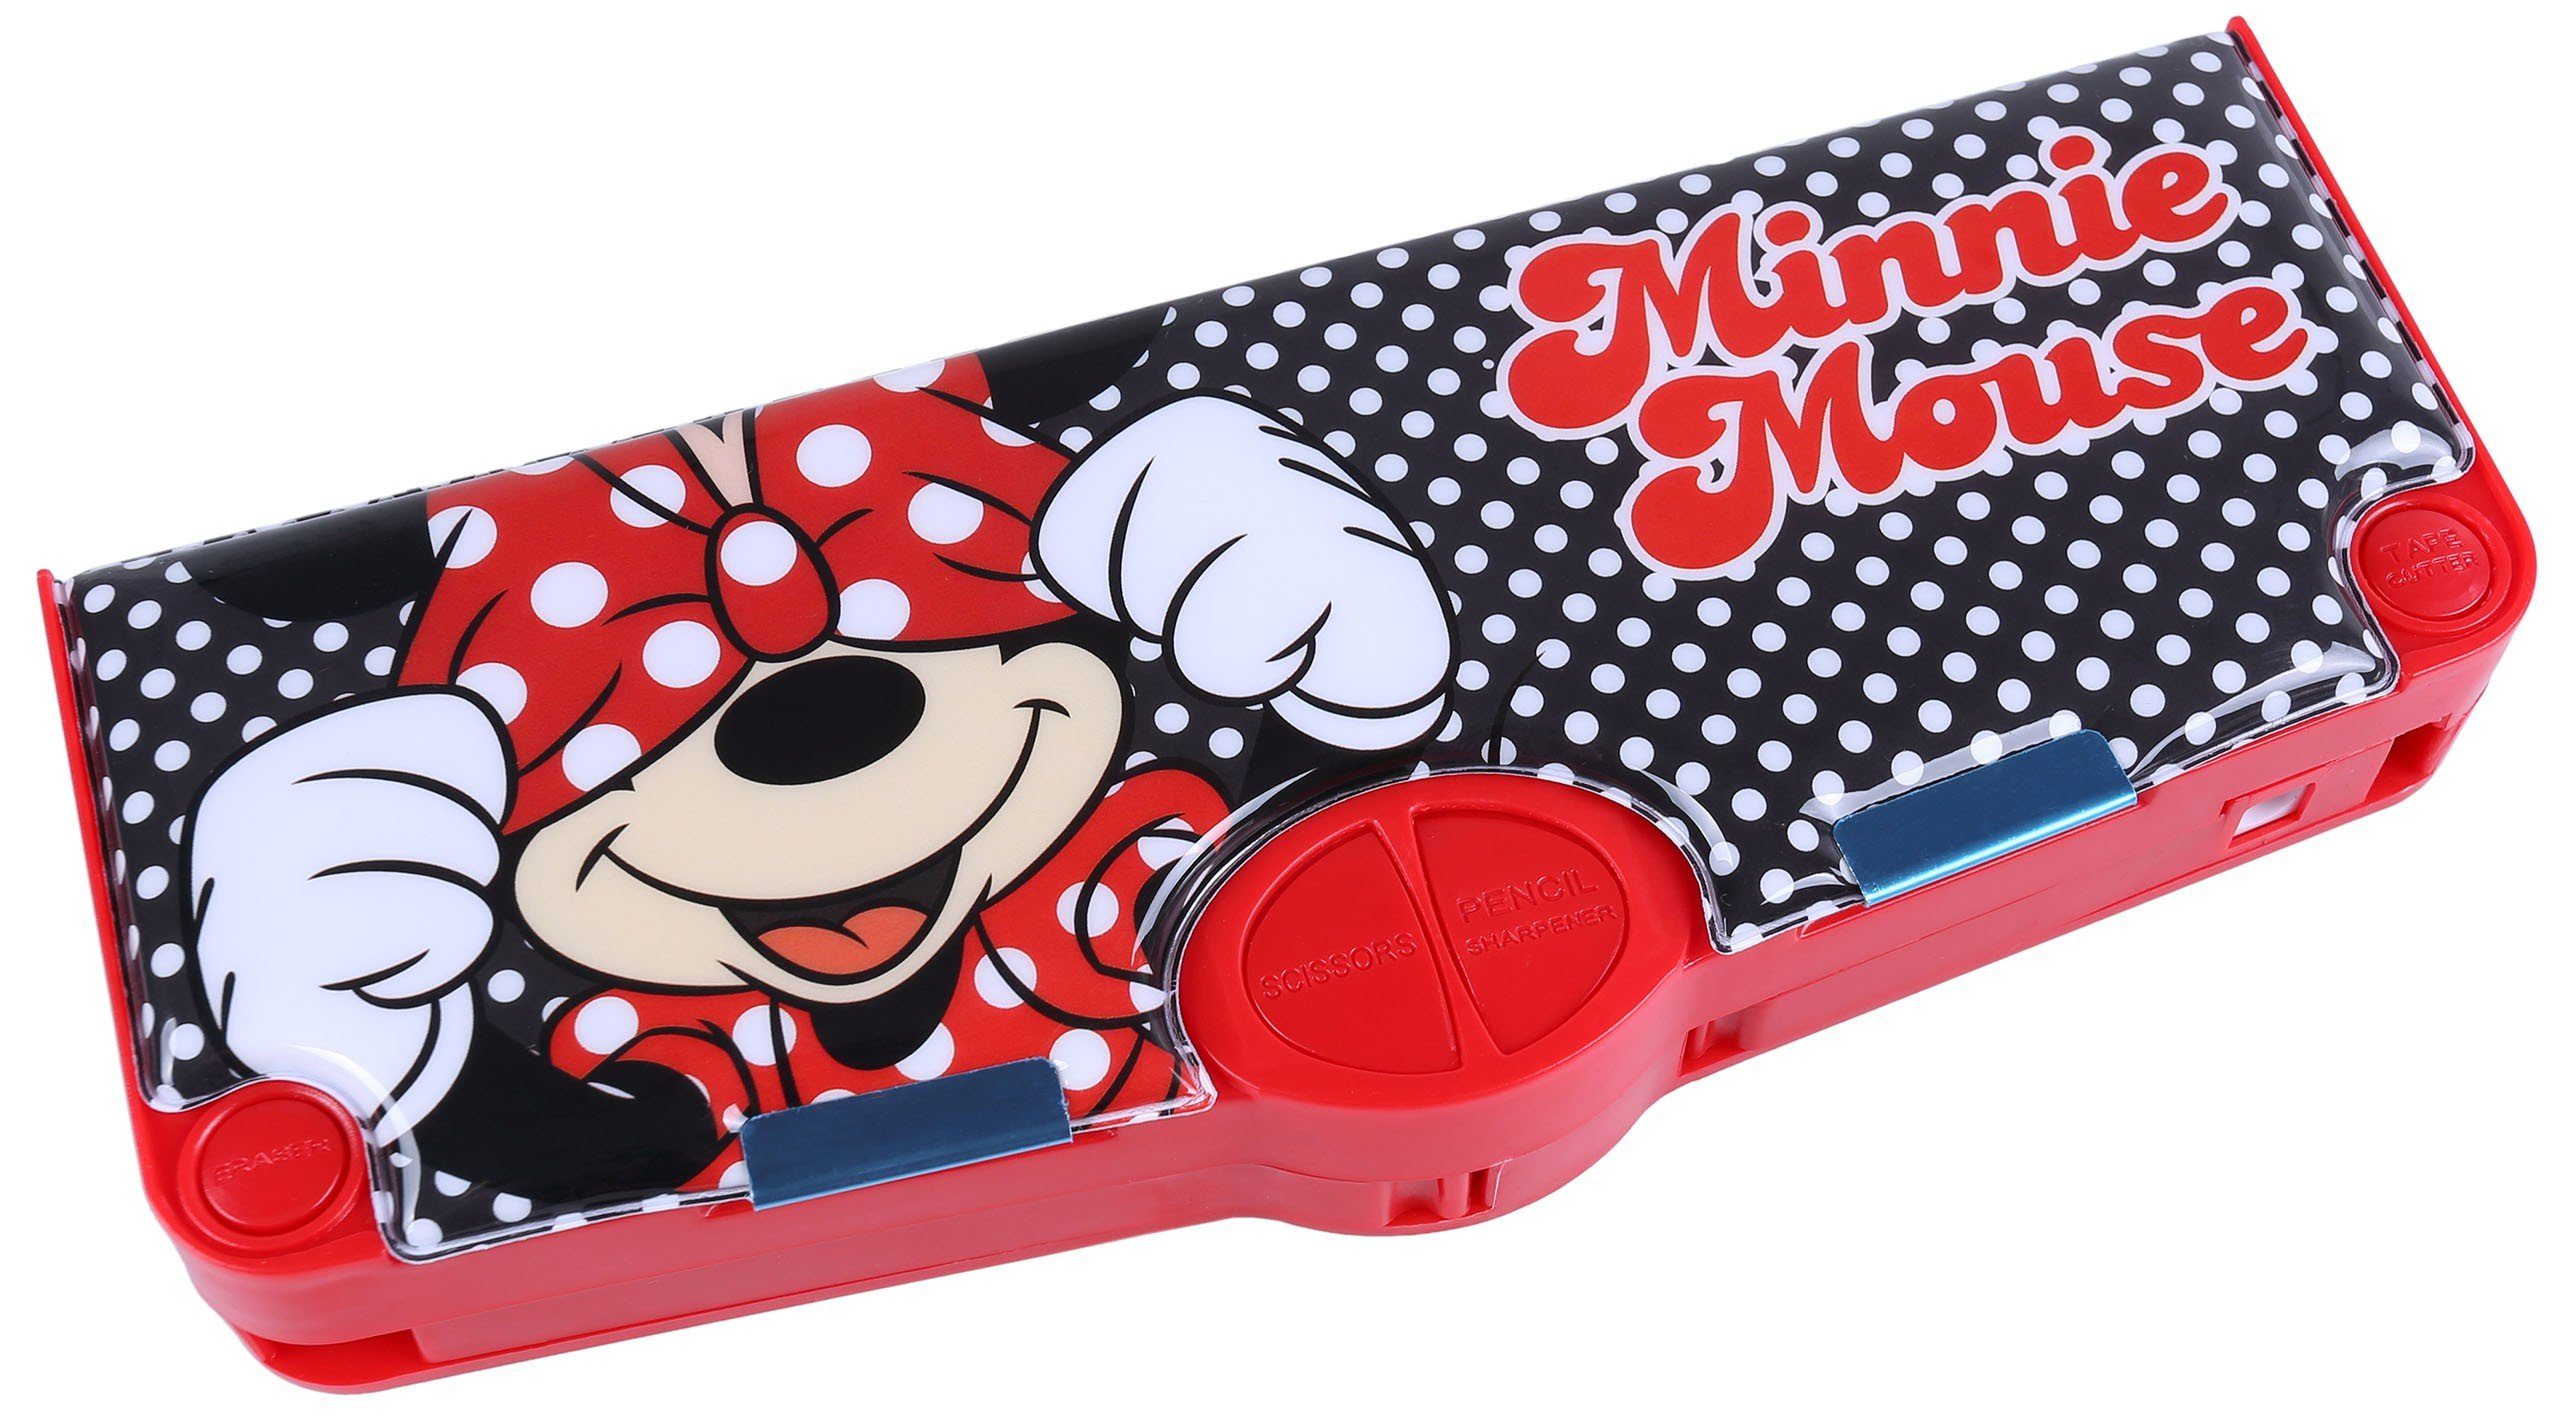 Sarcia.eu Federtasche DISNEY Minnie Mouse rot Kunststofffedertasche